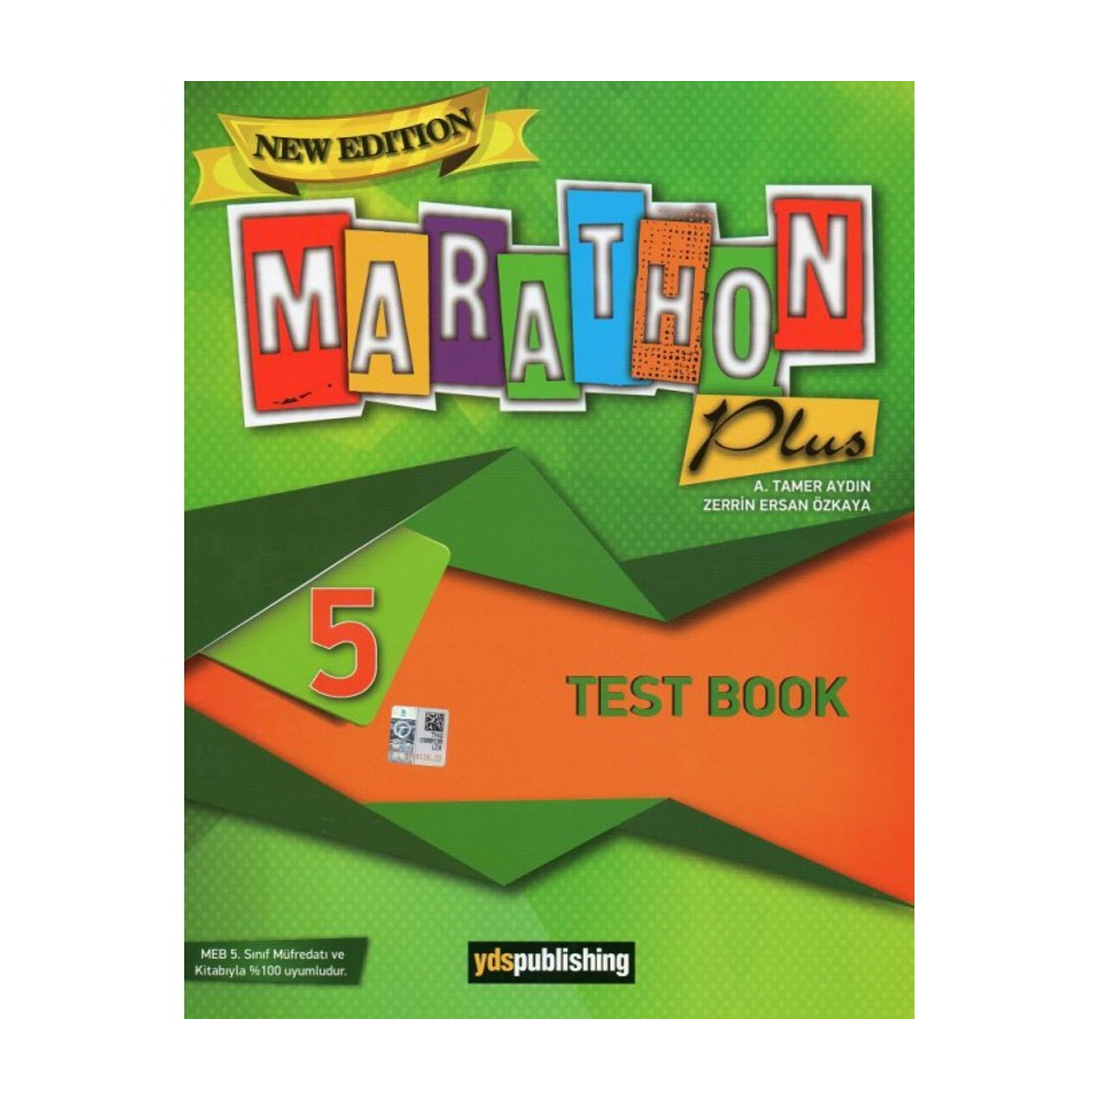 New Edition Marathon Plus Grade 5 Test Book